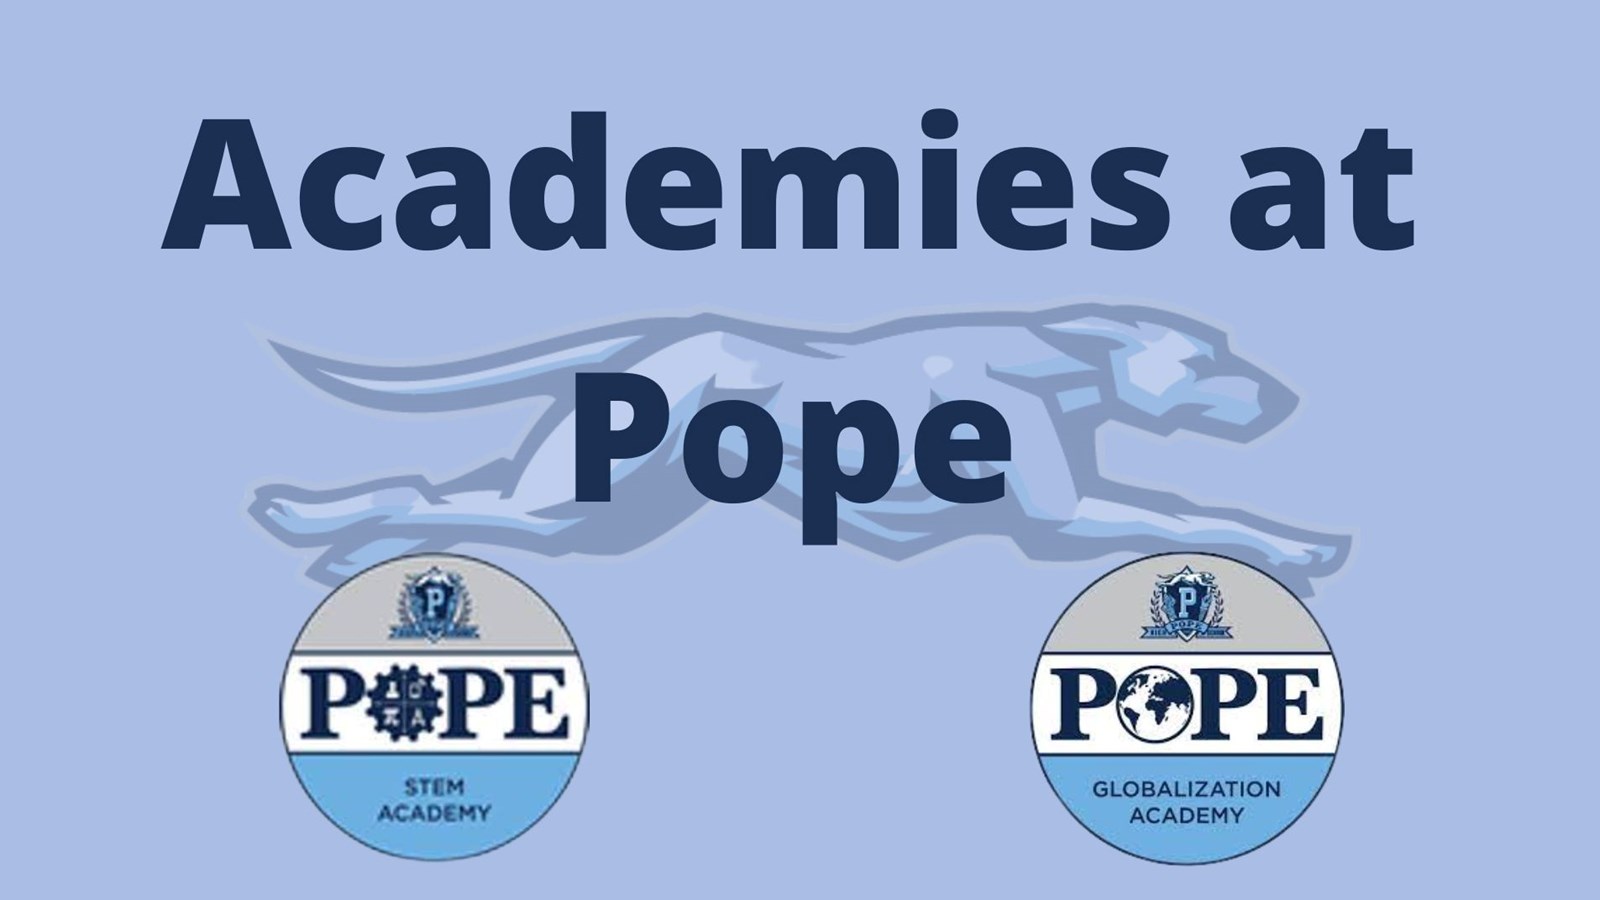 Academies at Pope